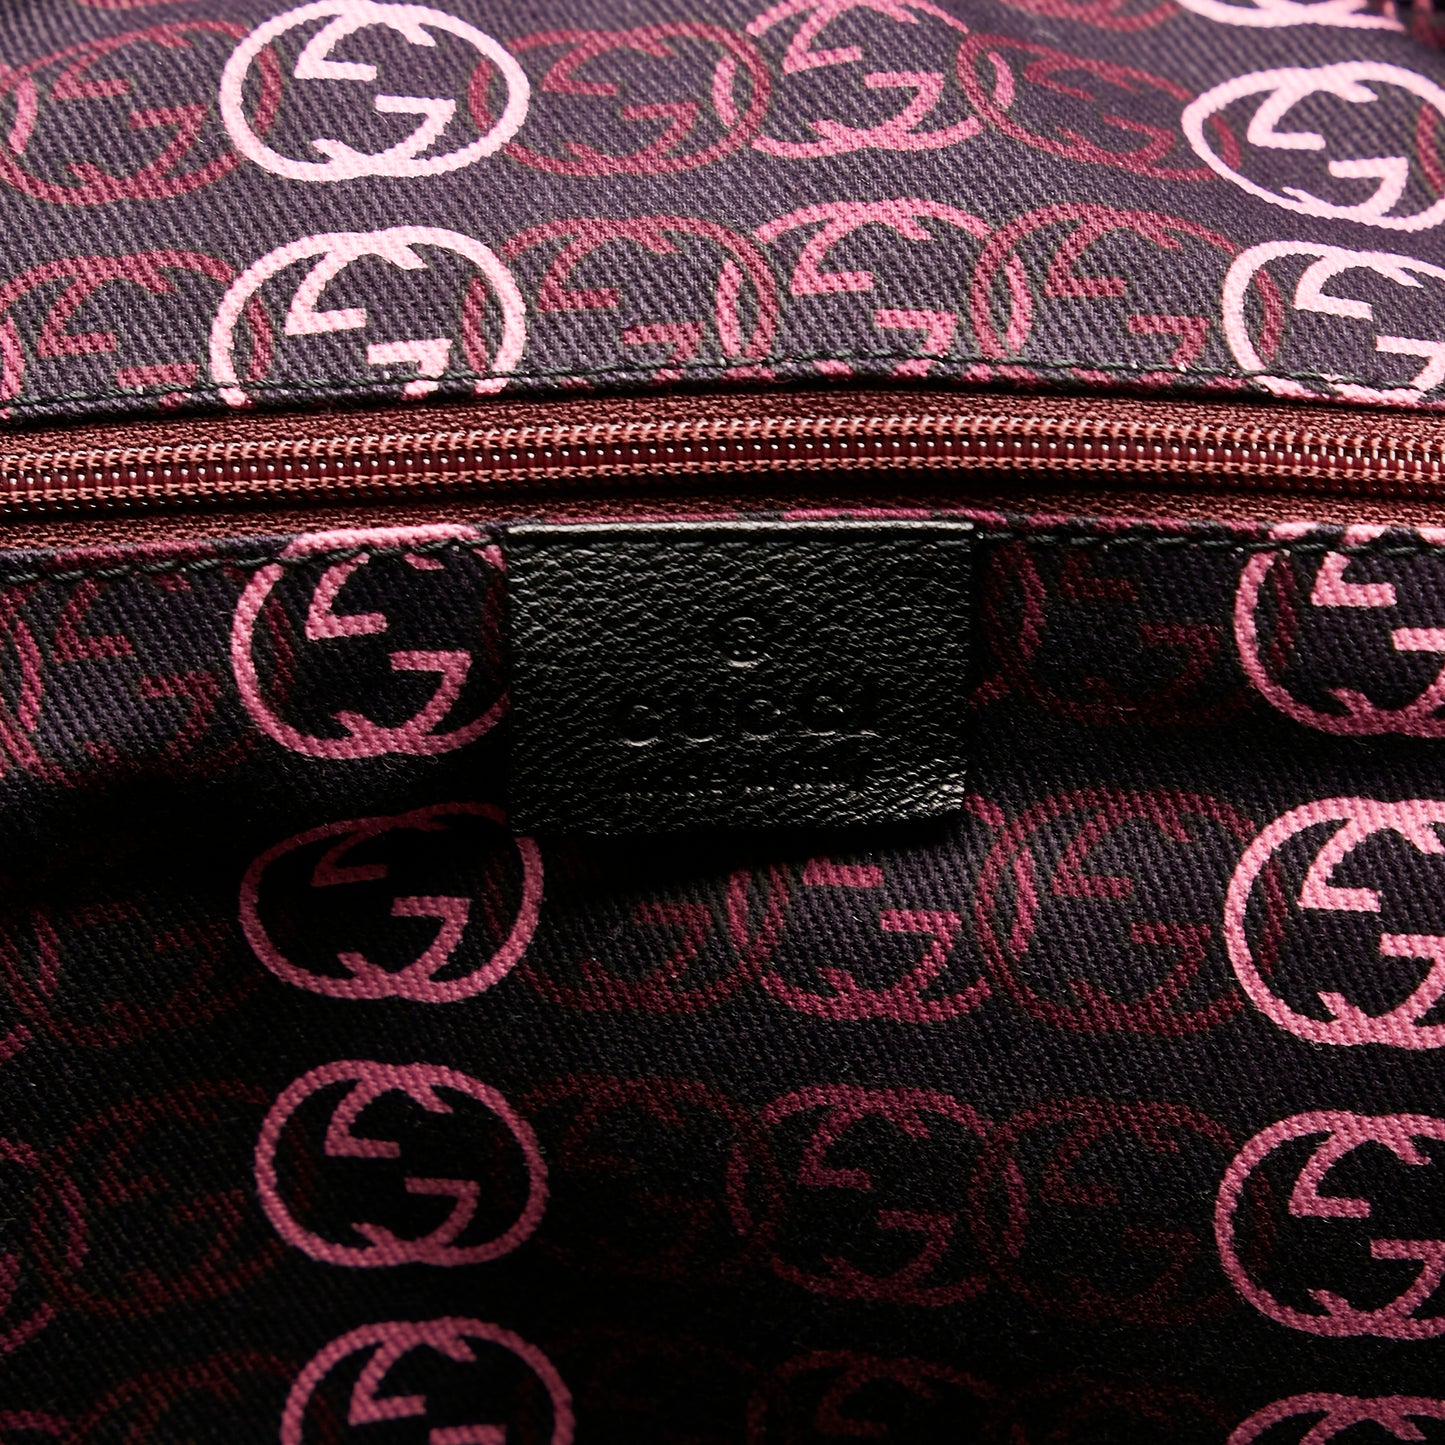 Princy Leather Travel Bag